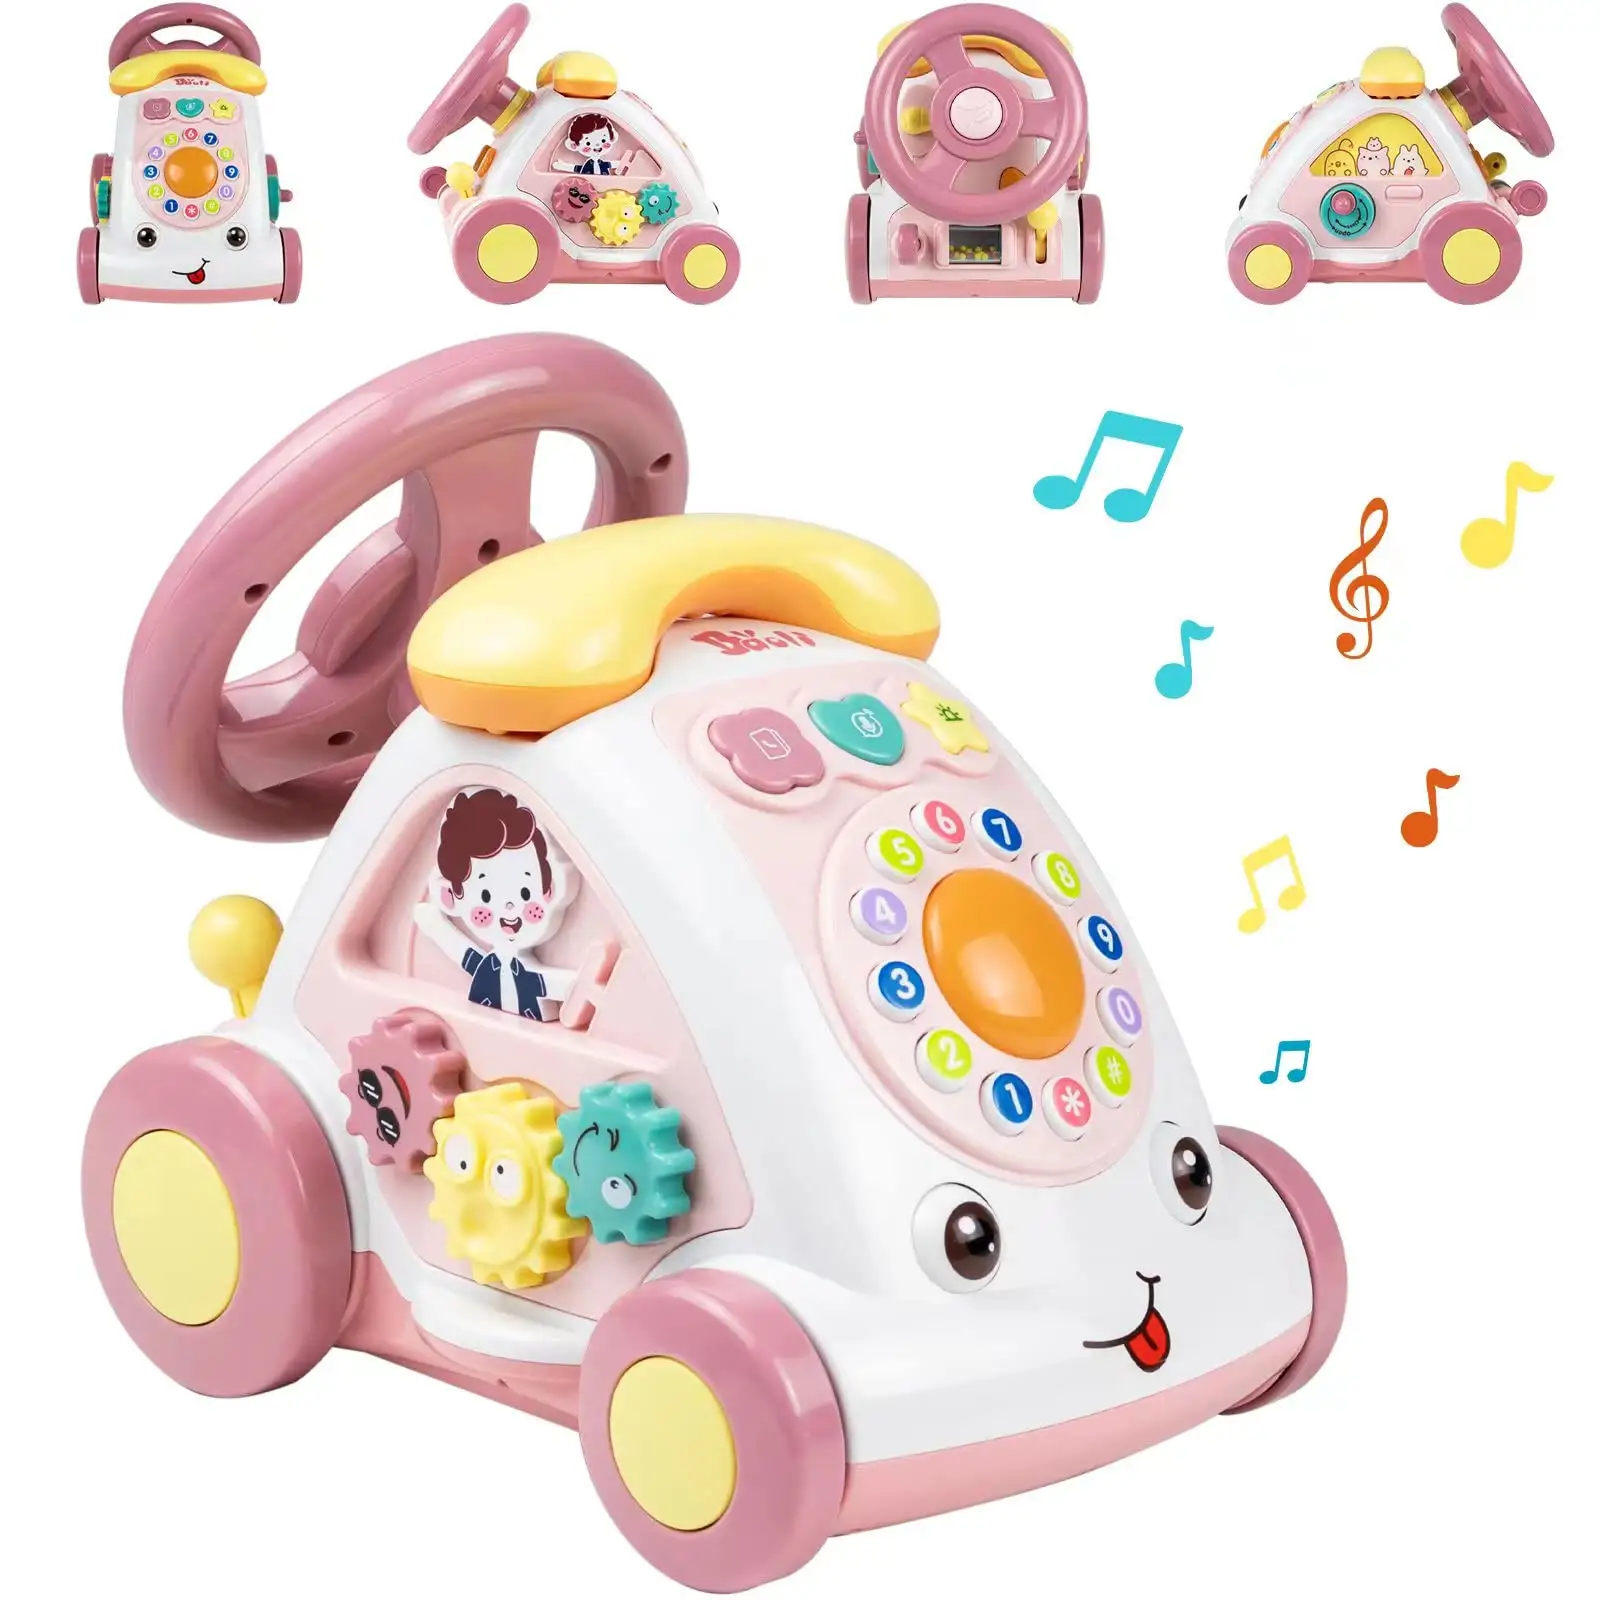 Baoli 2003 Steering wheel Toys Electric Universal Telephone Car Lighting Music Toy 3 In 1 Infant Kids Wholesale Baby Walkers